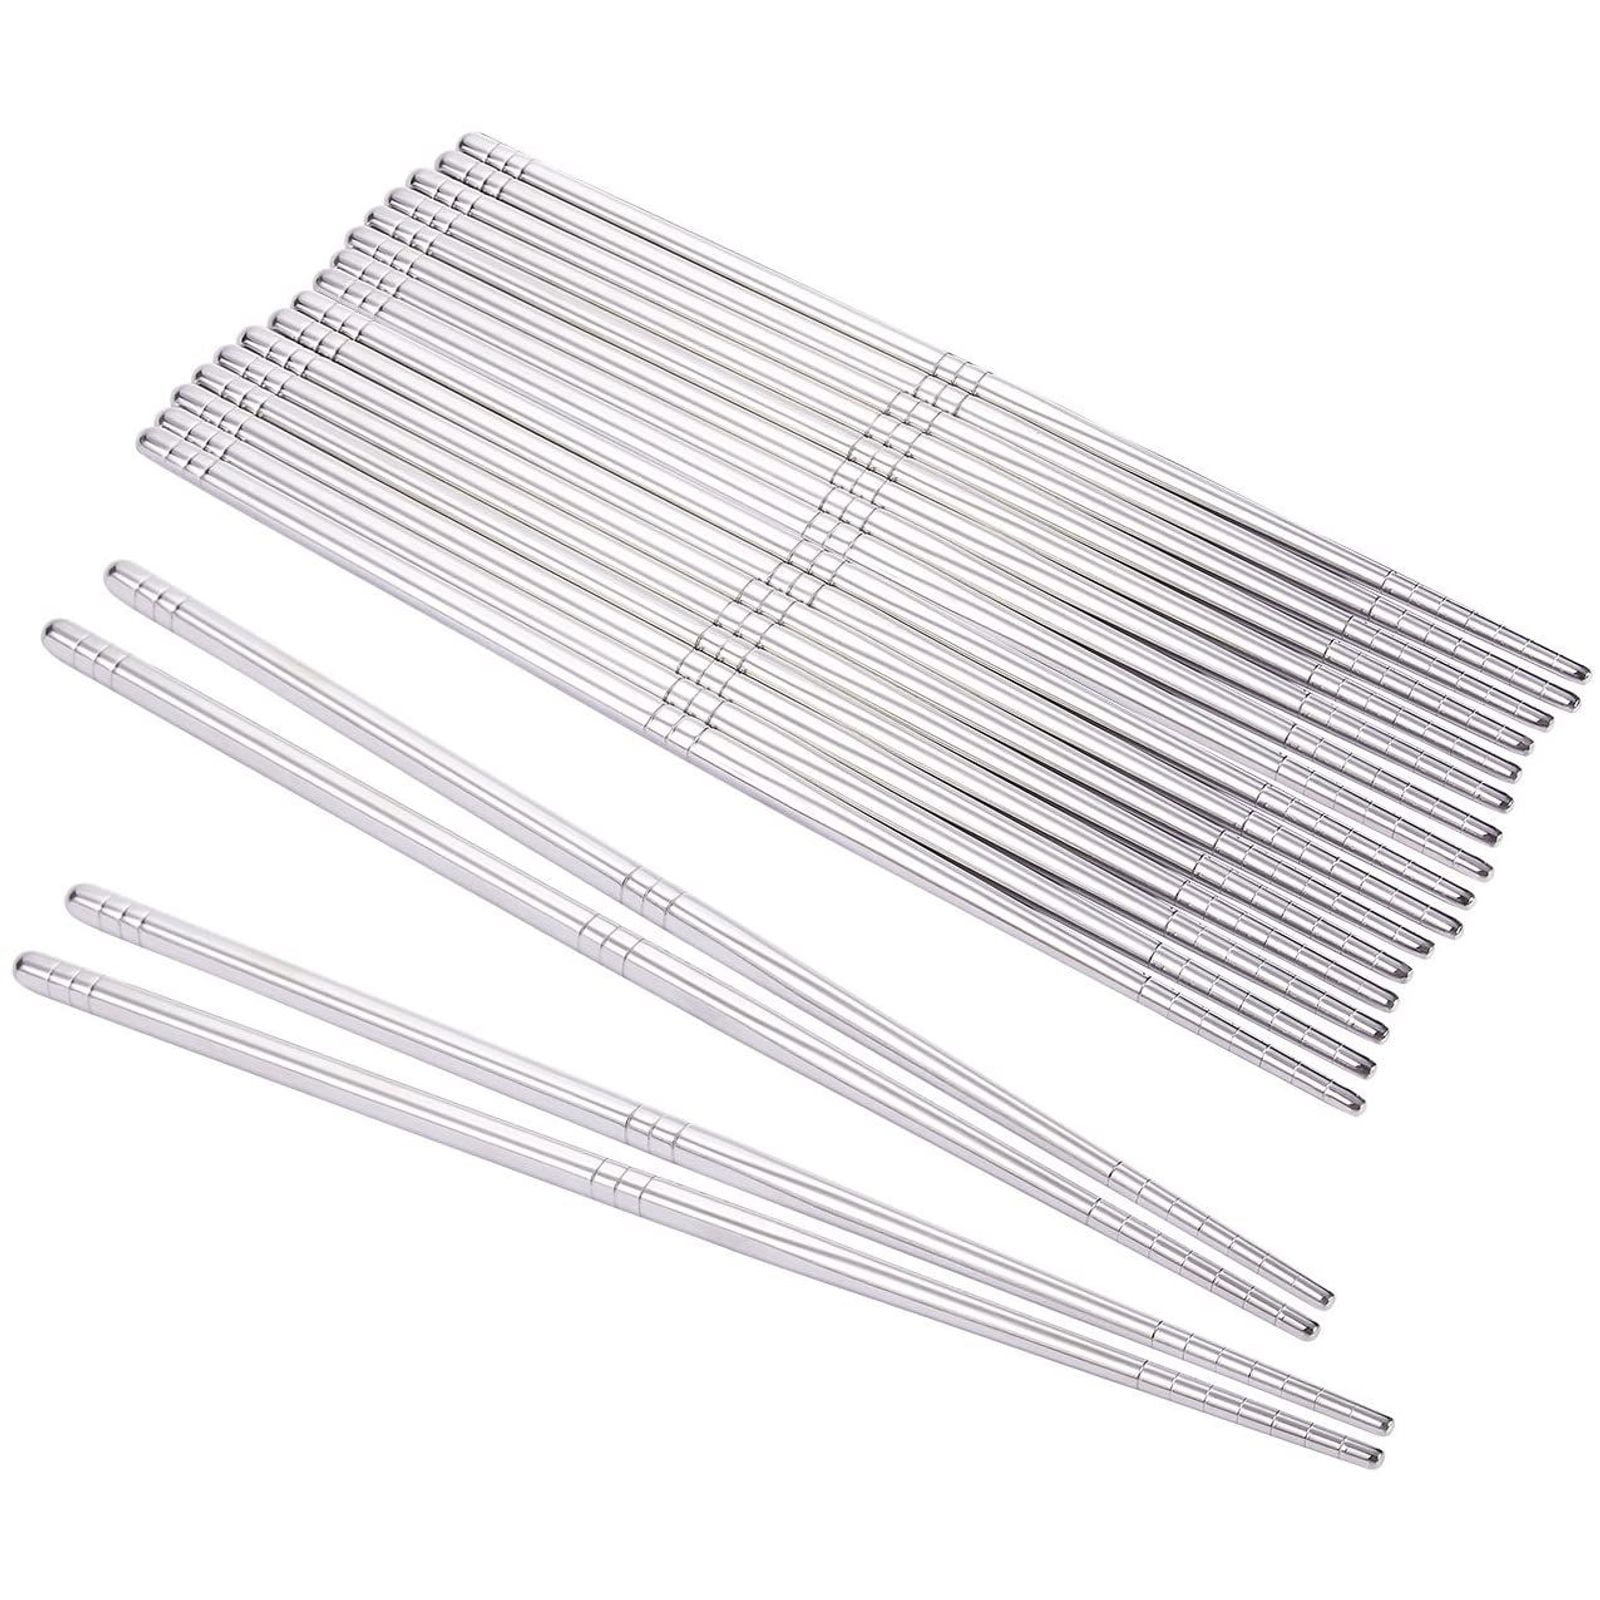 10 Pair Reusable Chopsticks Metal Korean Chinese Stainless Steel Chop Sticks 